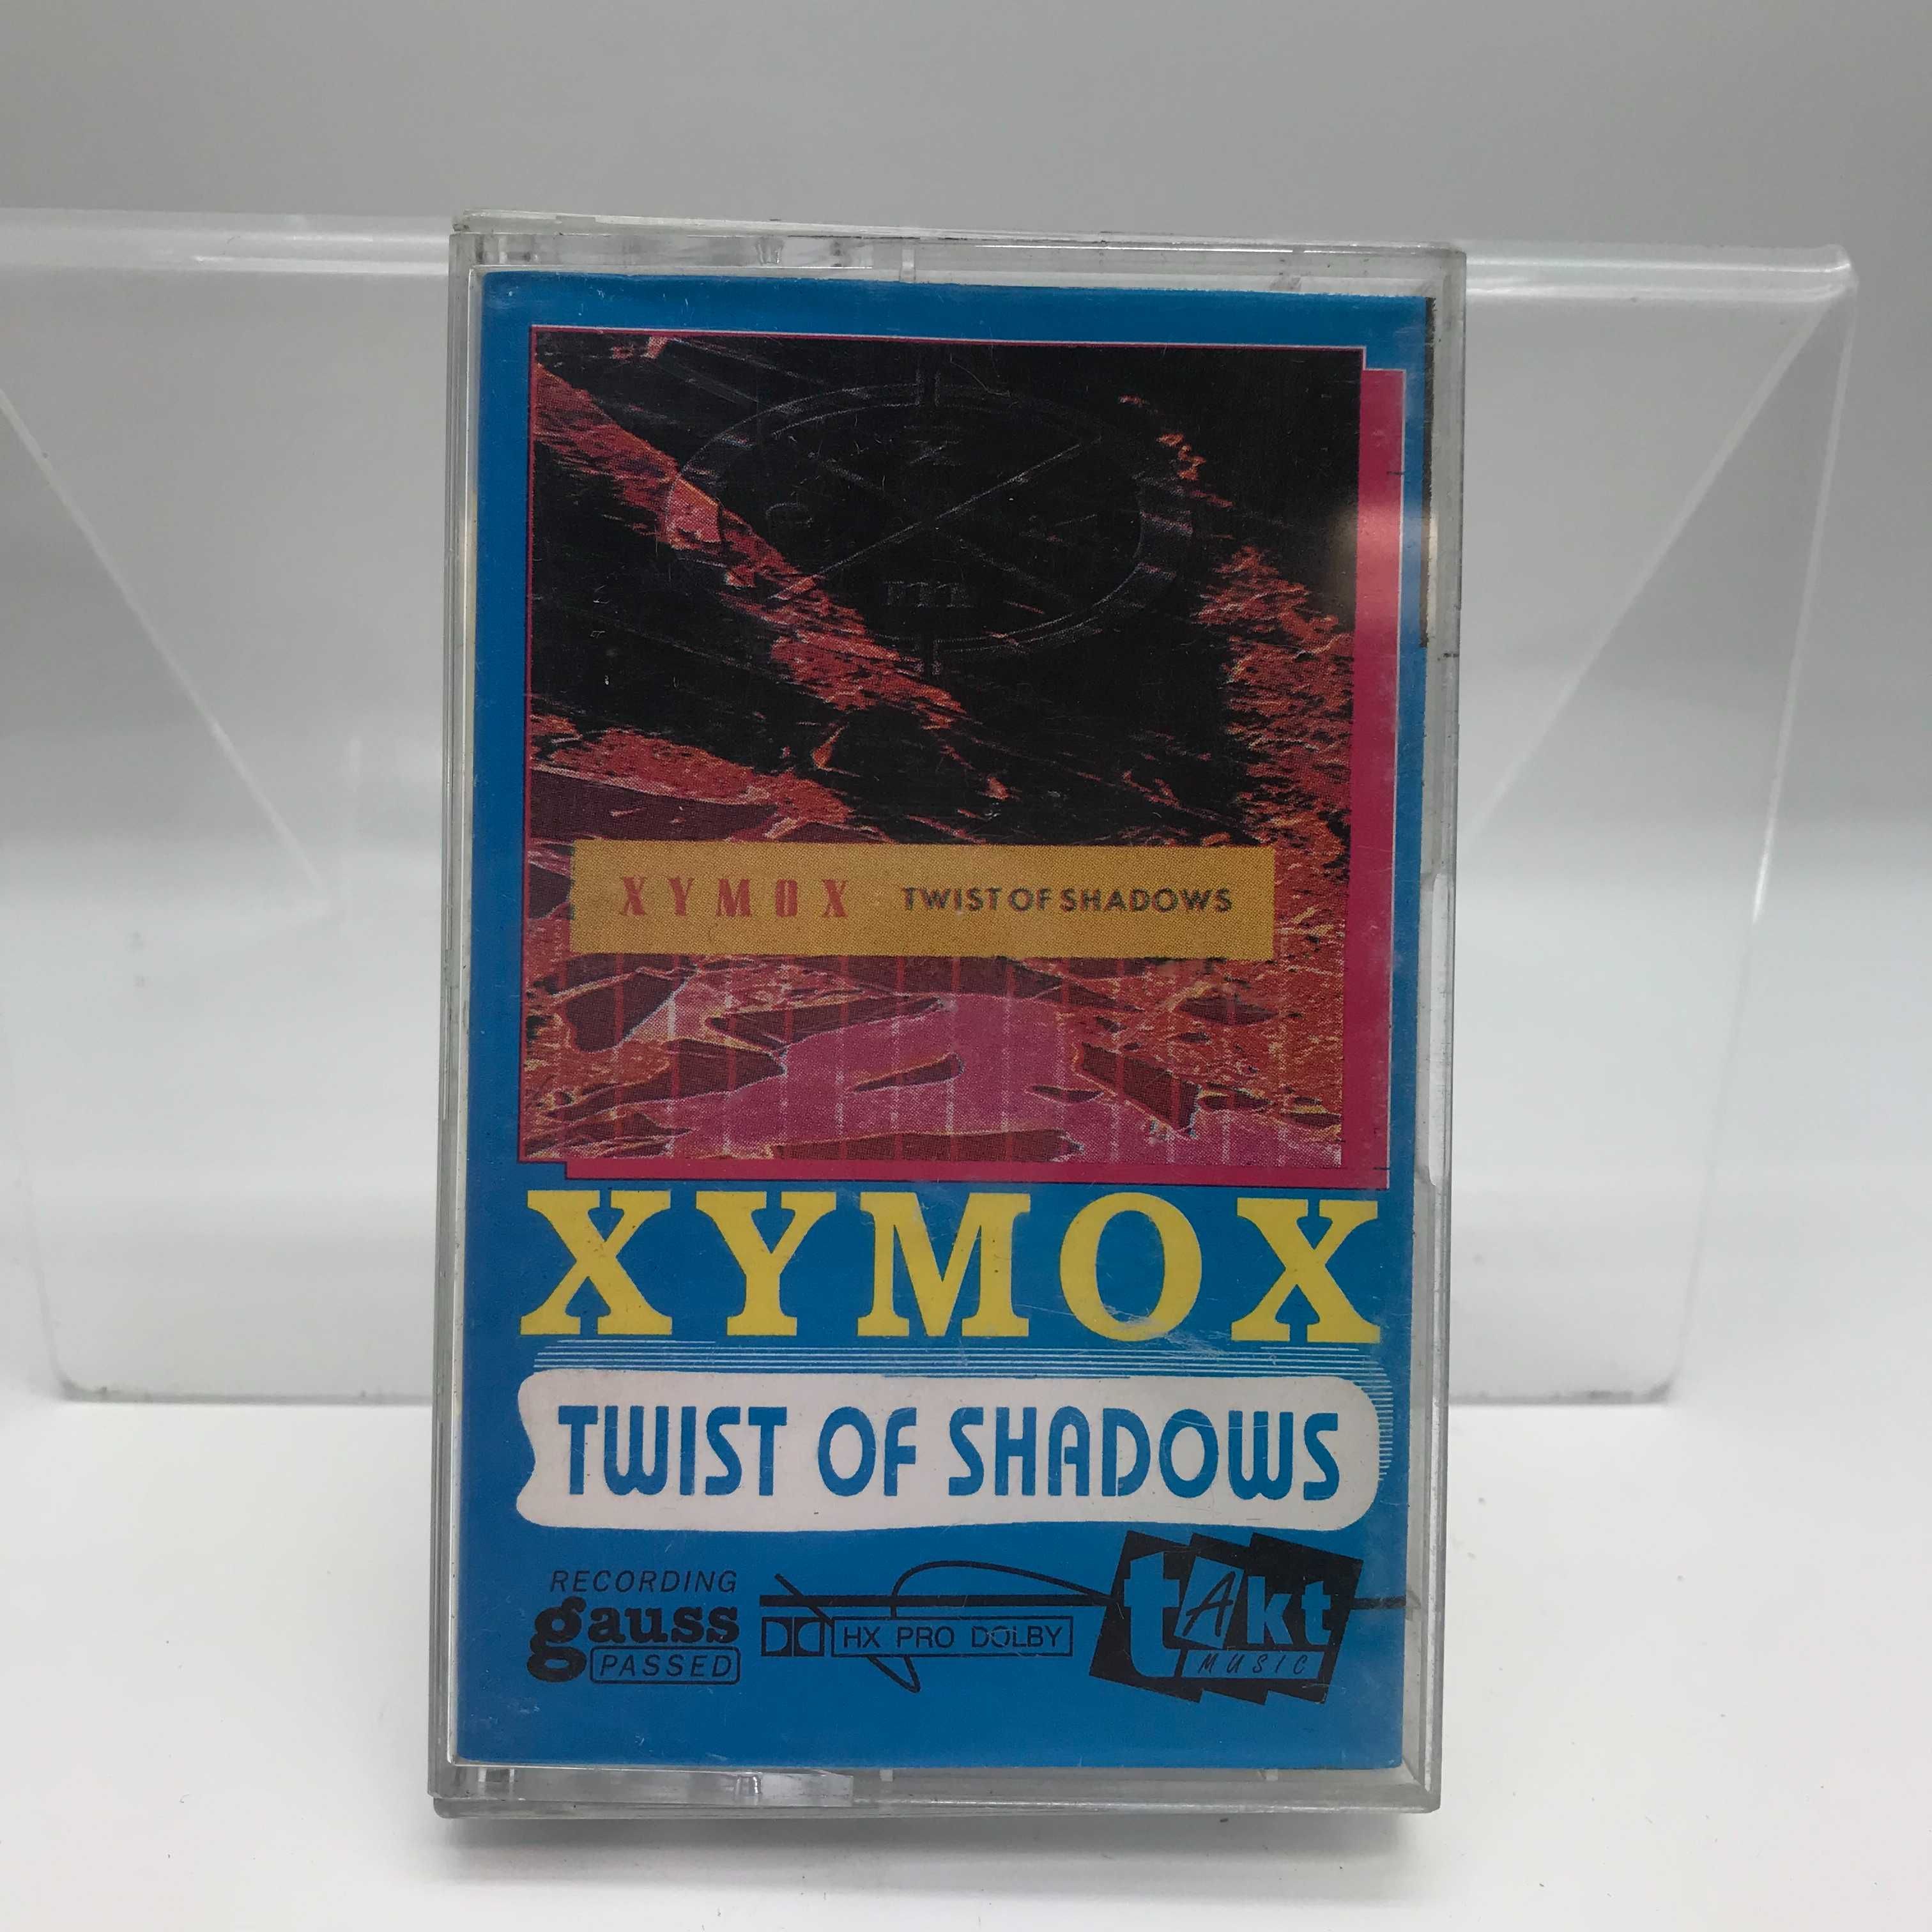 kaseta xymox - twist of shadows (2322)